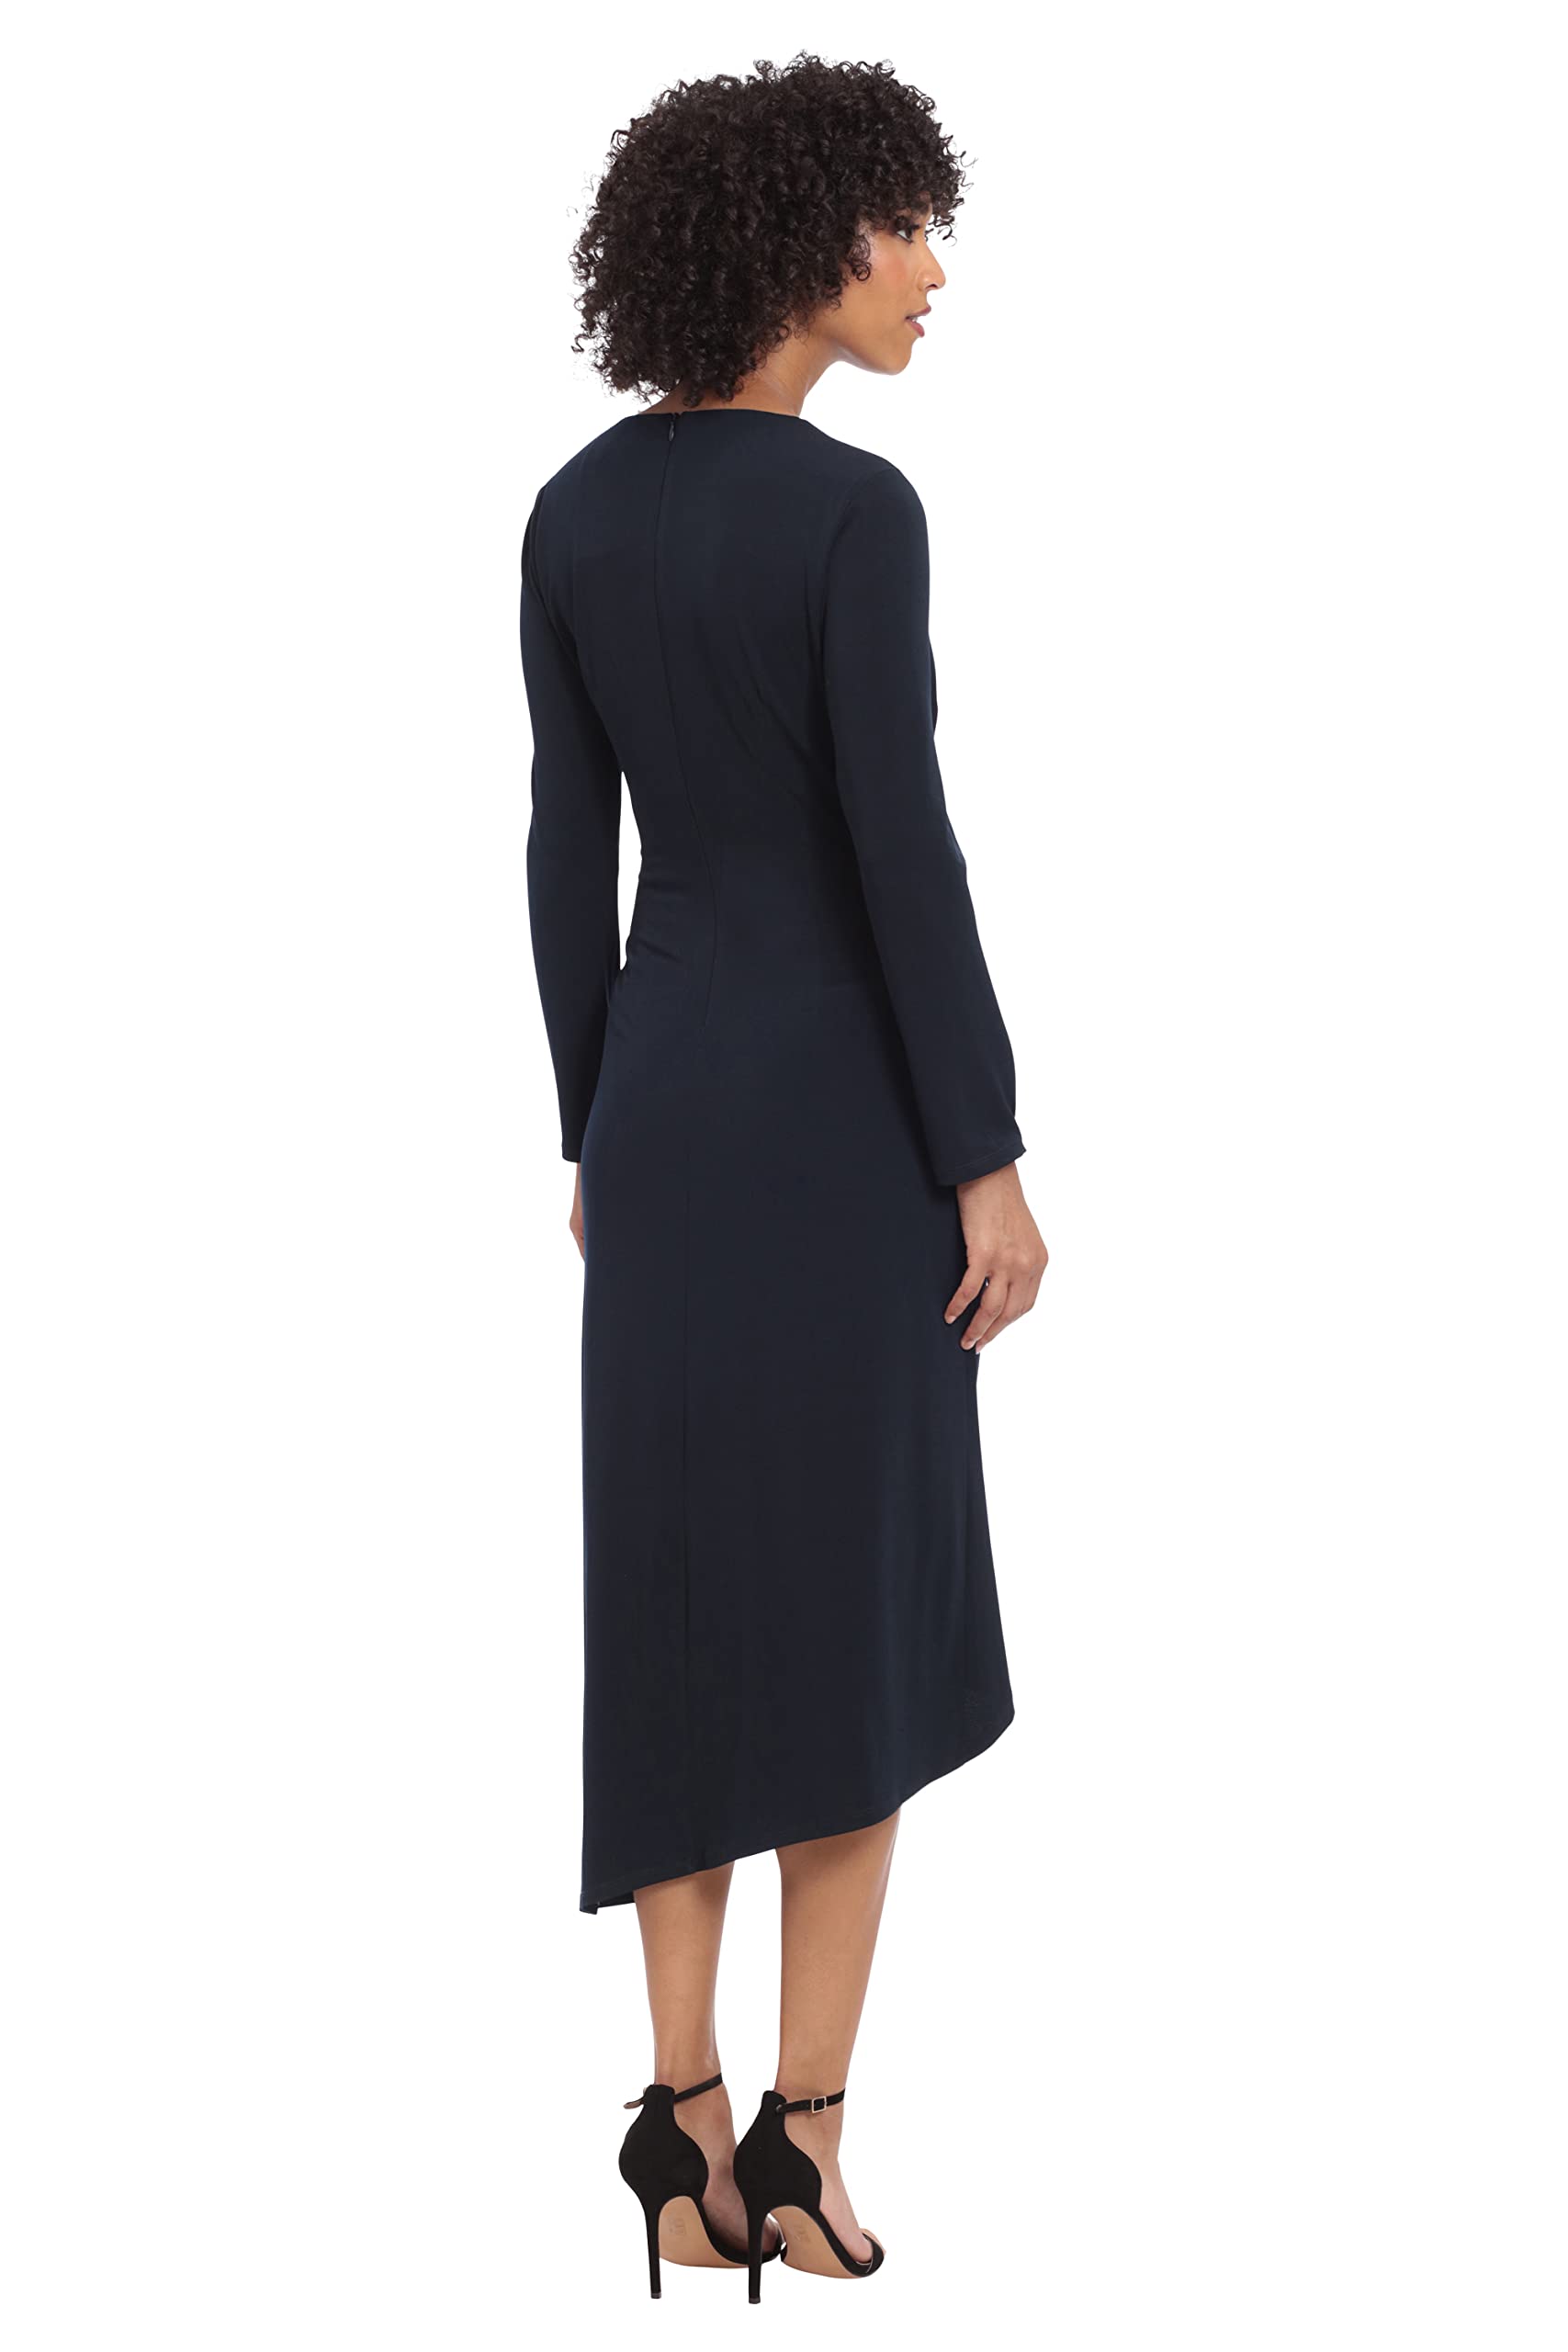 Maggy London Women's Long Sleeve Asymmetric Neck and Hem Dress